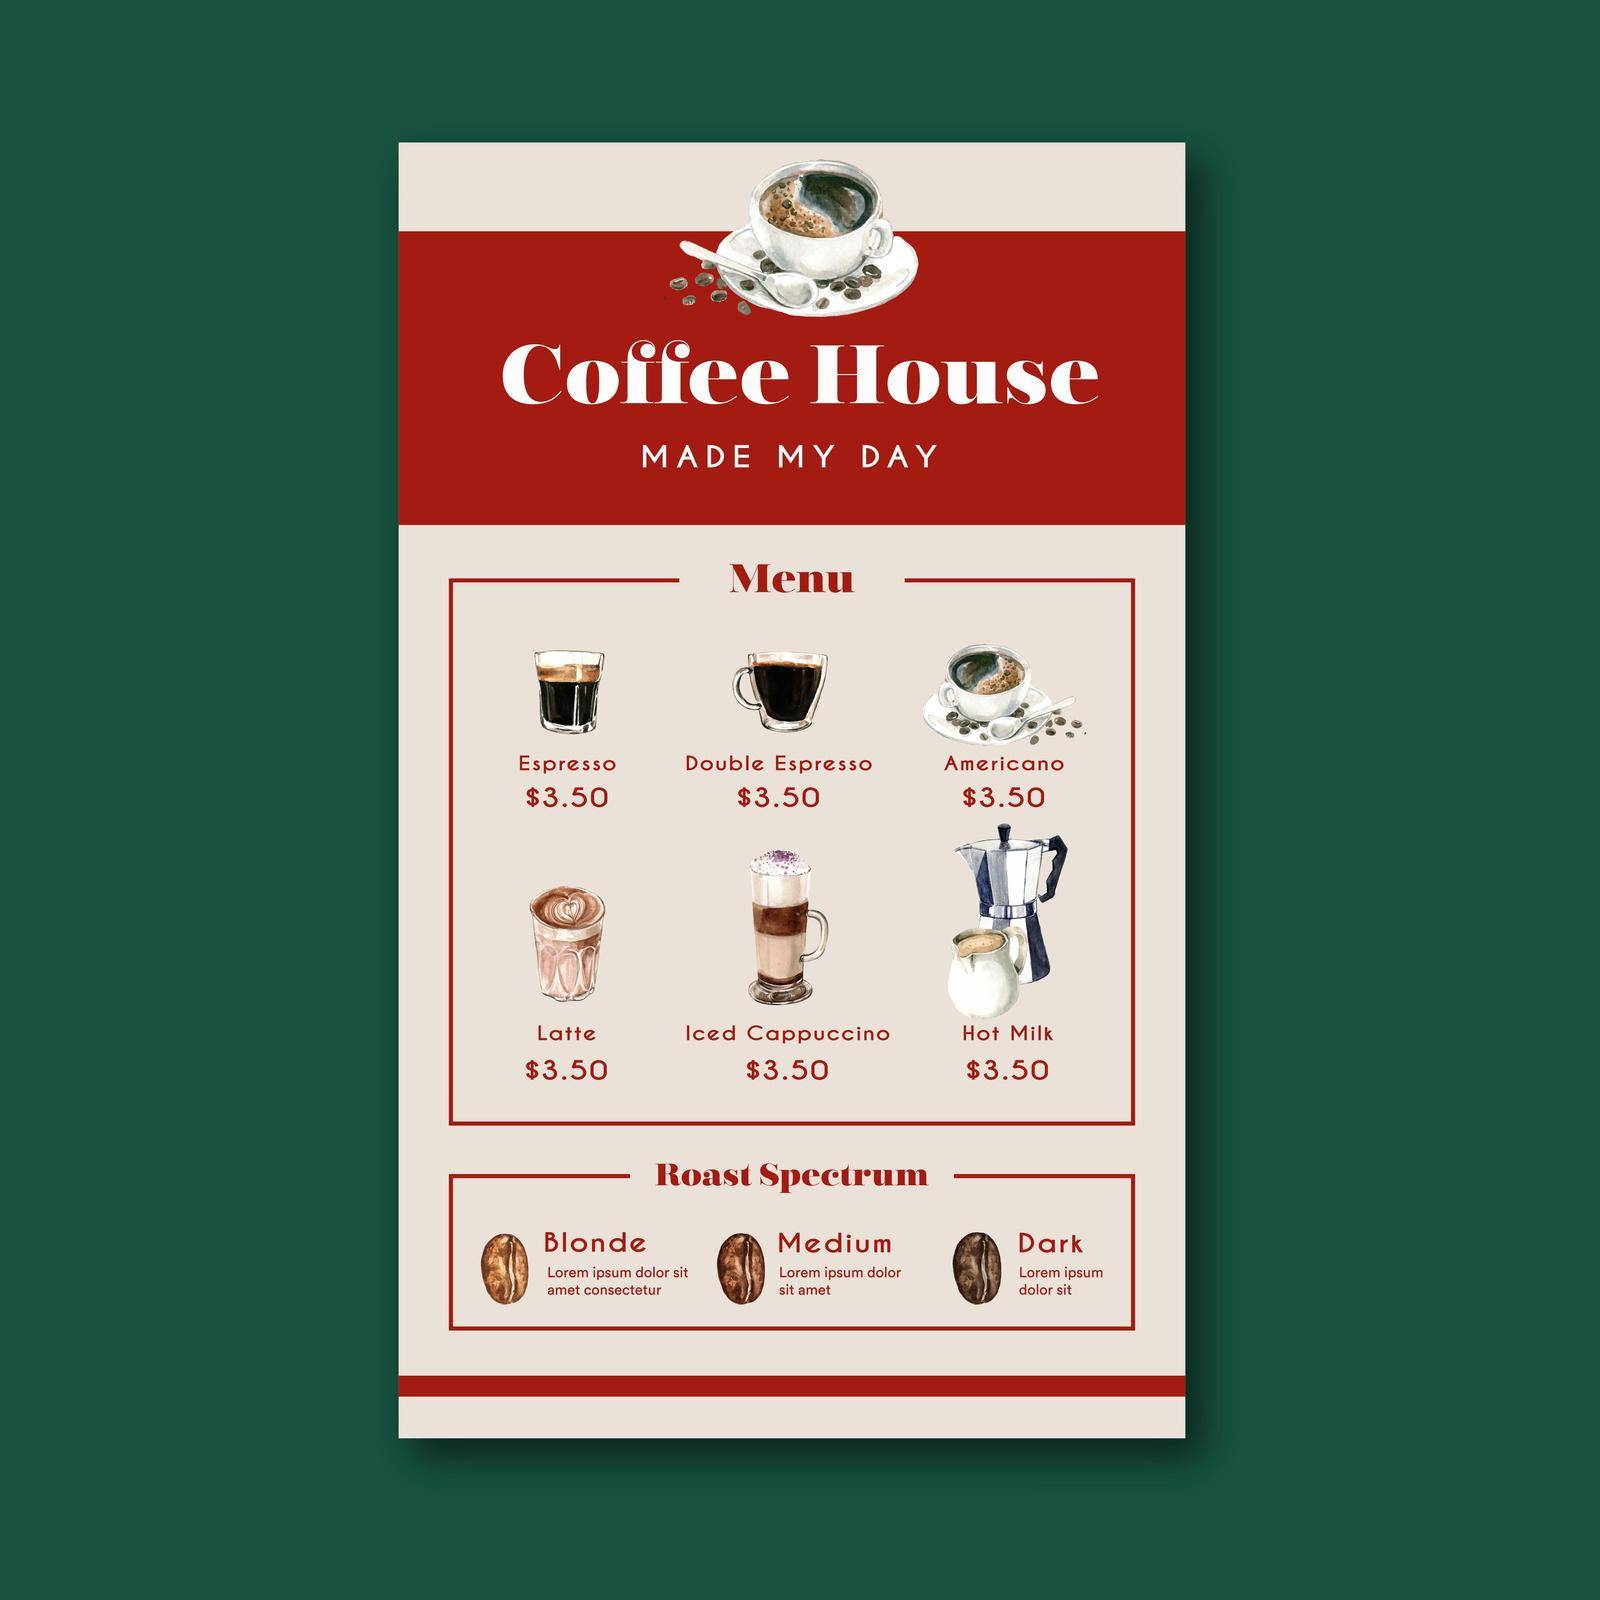 coffee house menu americano, cappuccino, espresso menu, infographic, watercolor illustration by Photographeeasia